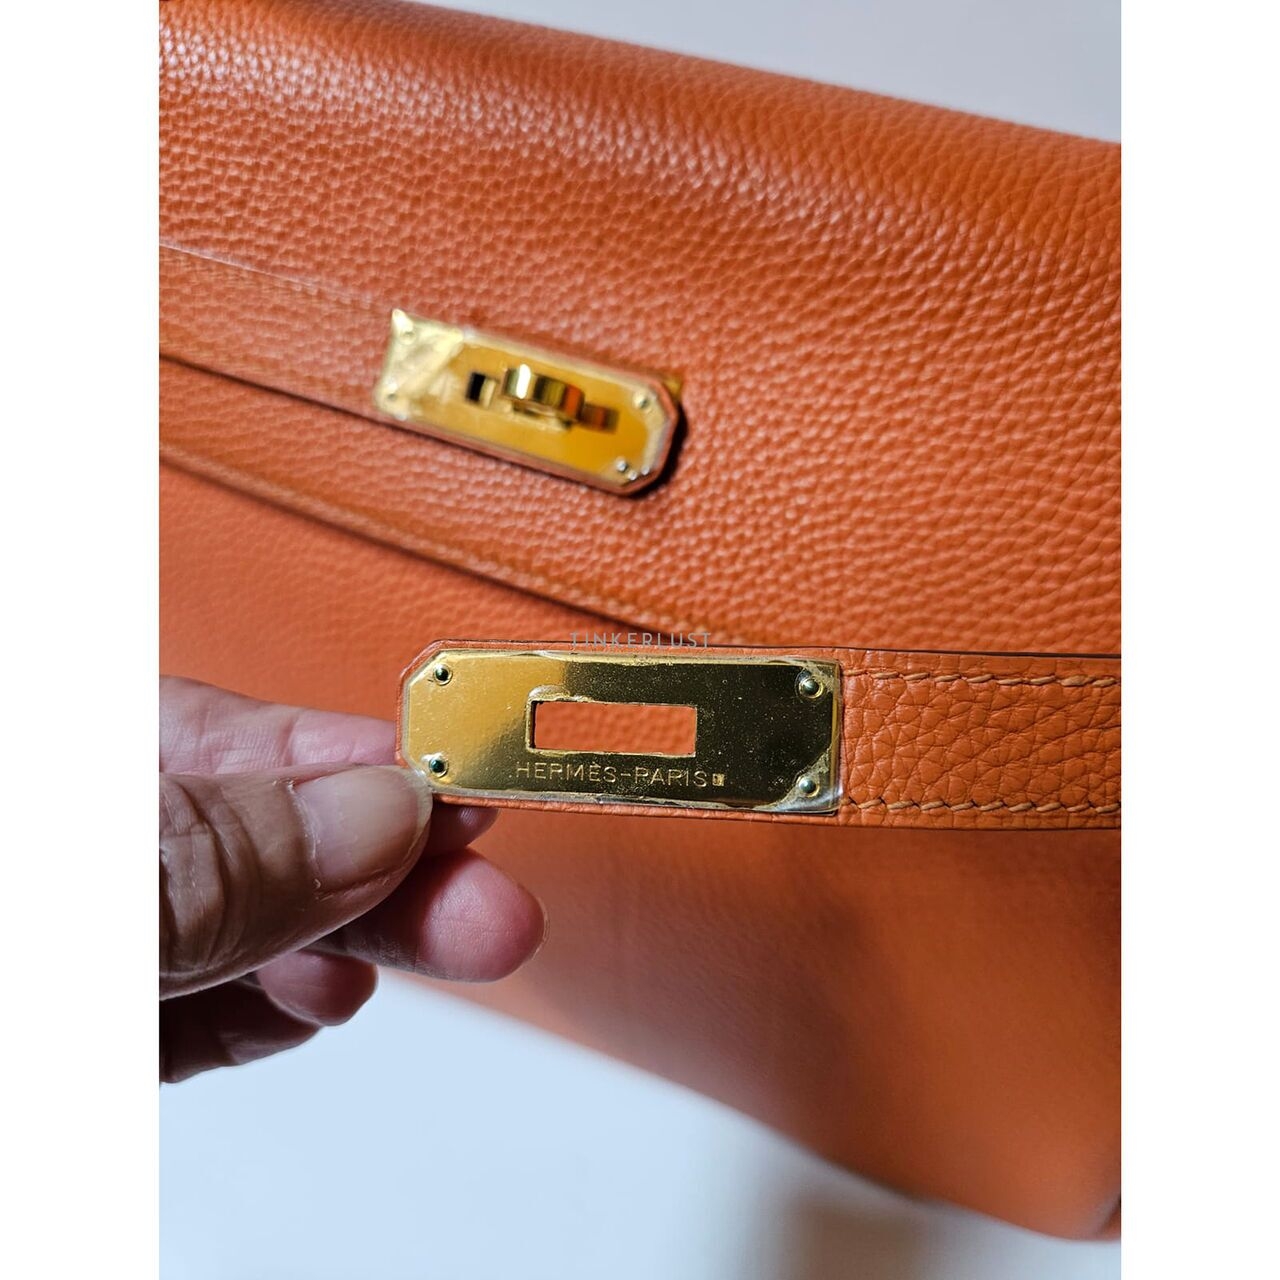 Hermes Kelly 35 Orange Togo Leather #N GHW Satchel